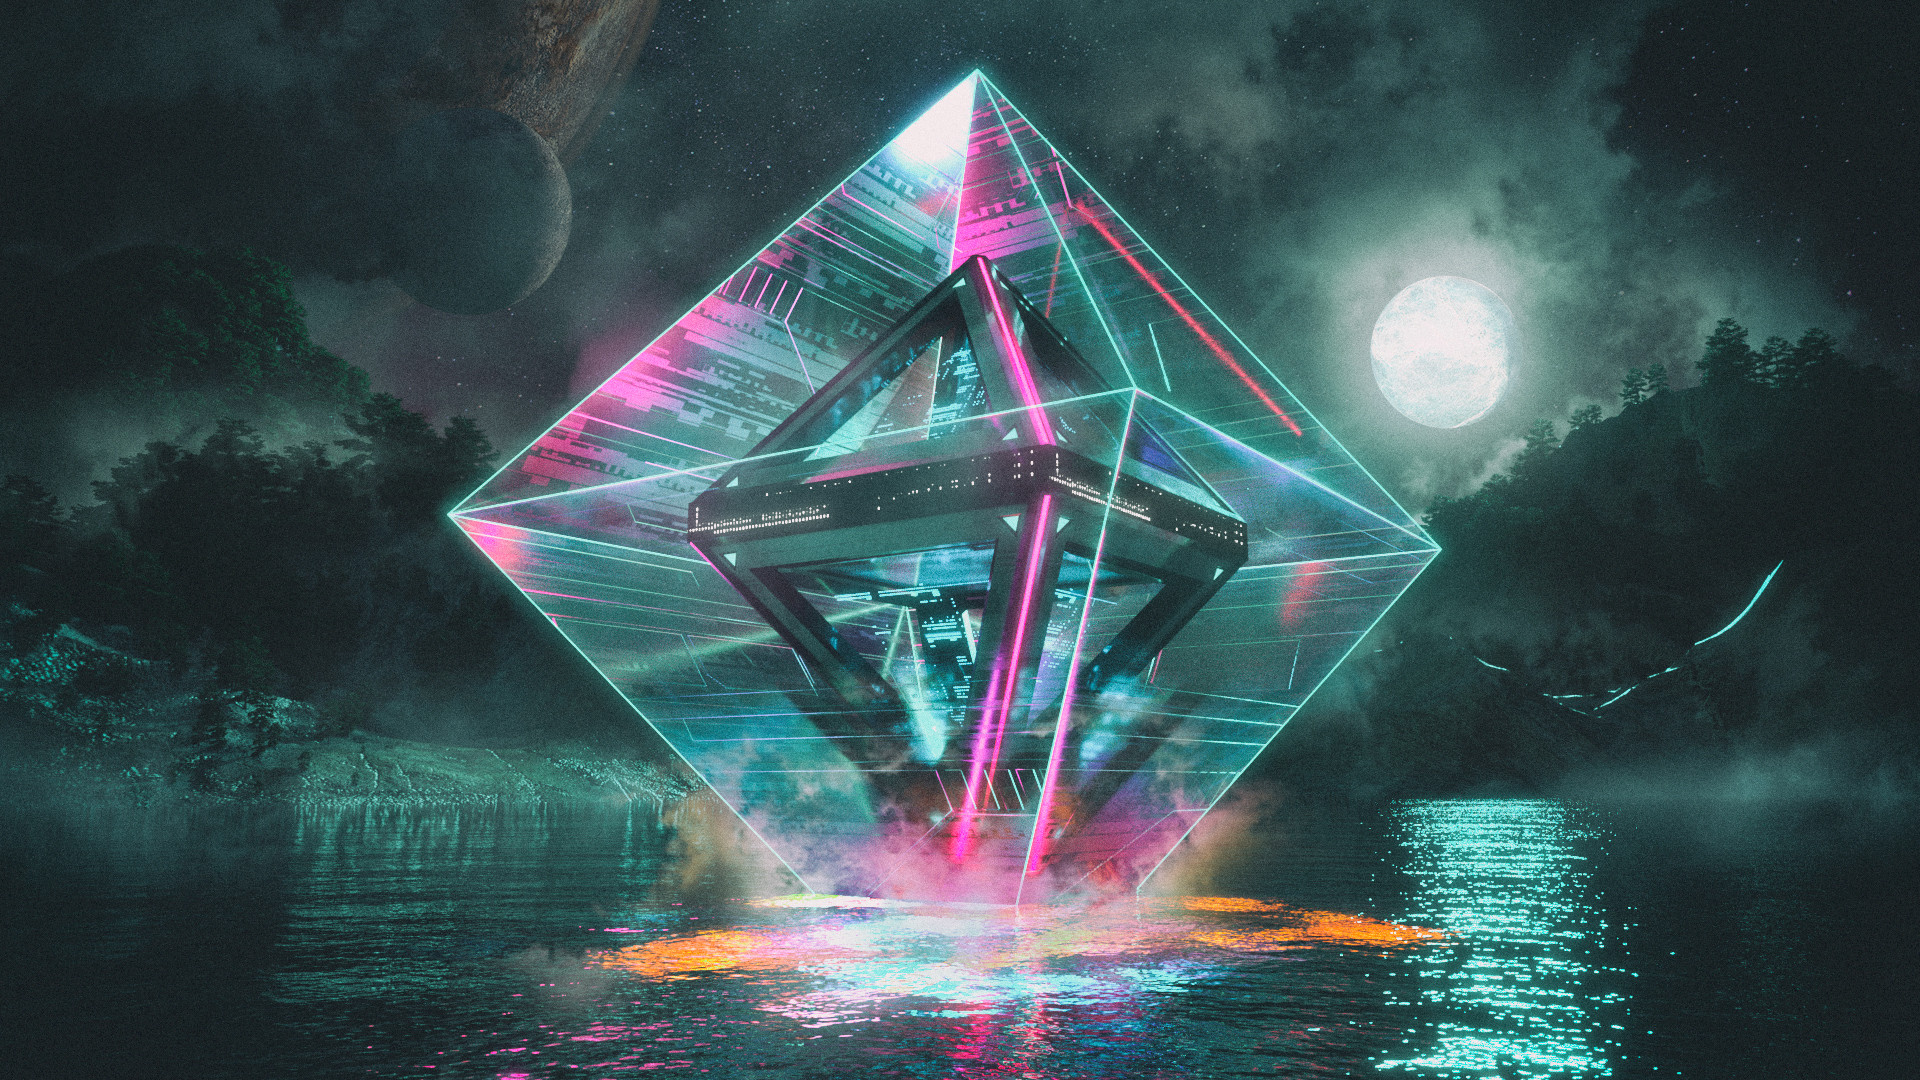 David Legnon Cyberpunk Neon Glow Prism Moon Water Reflection Science Fiction Planet Mist Night 1920x1080